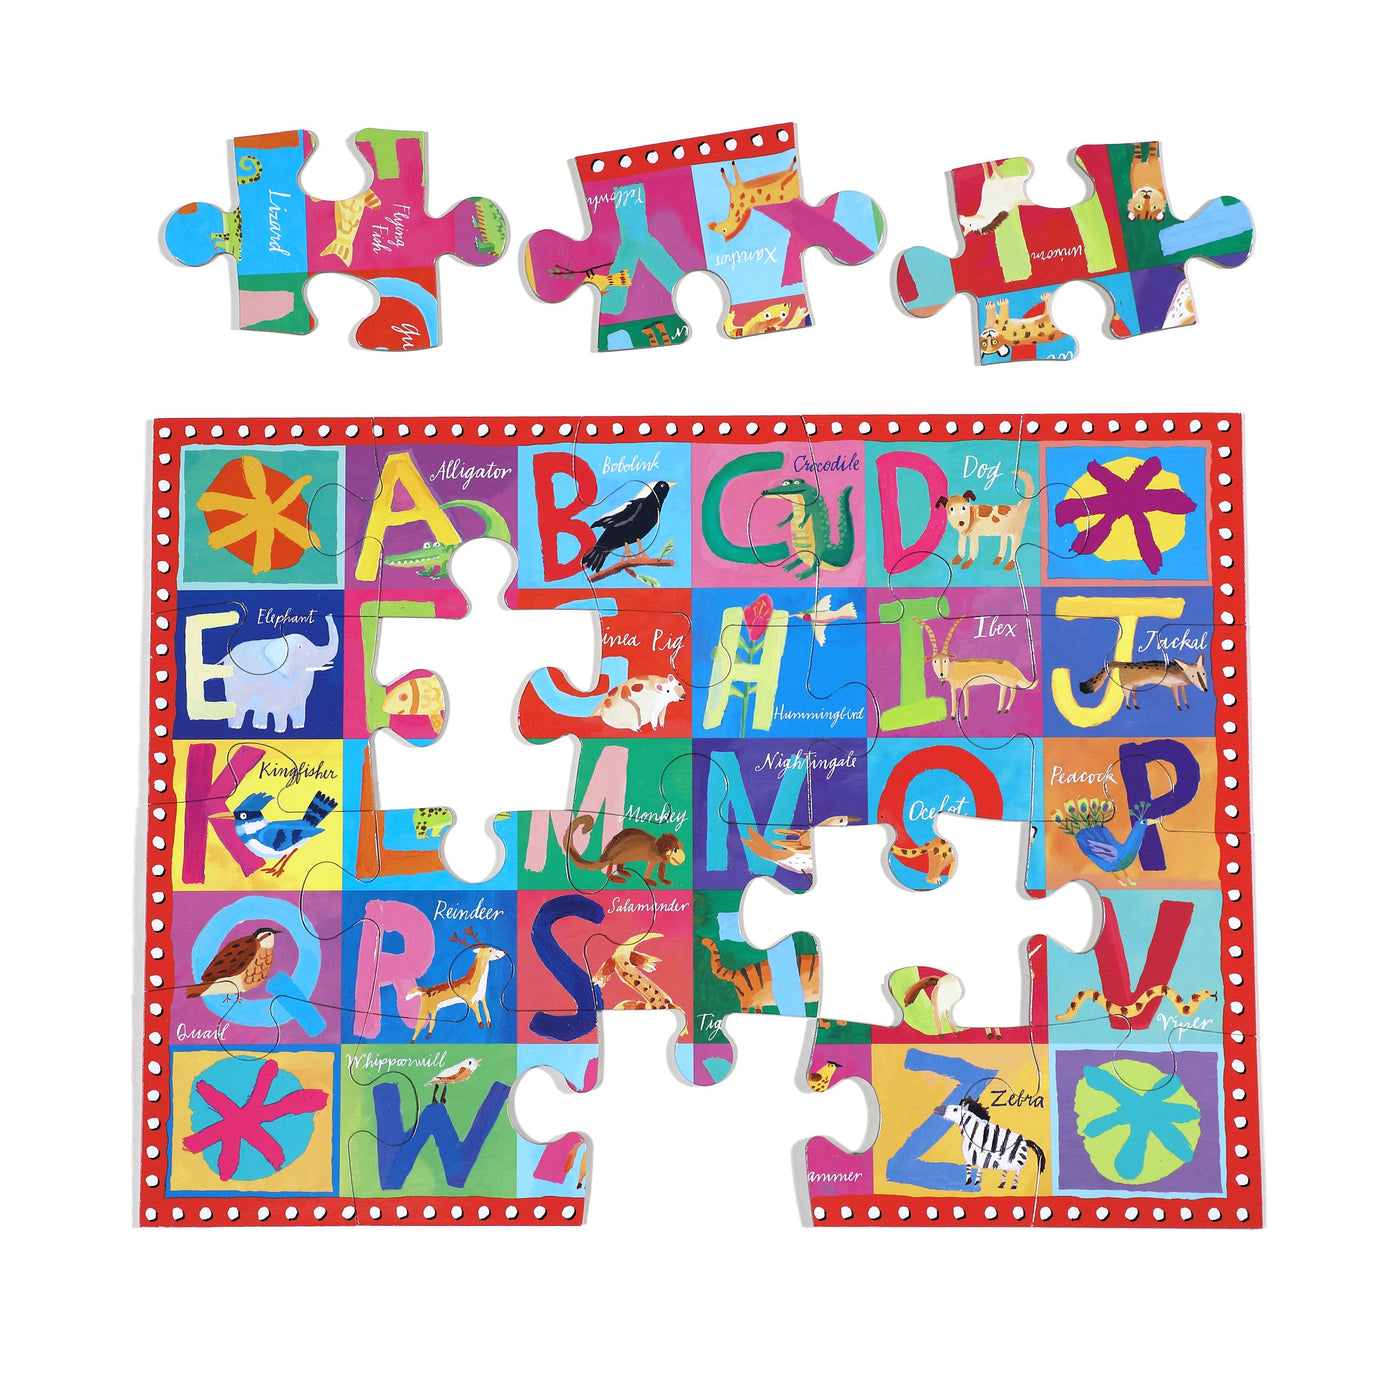 Animal ABC | 20 Piece Jigsaw Puzzle